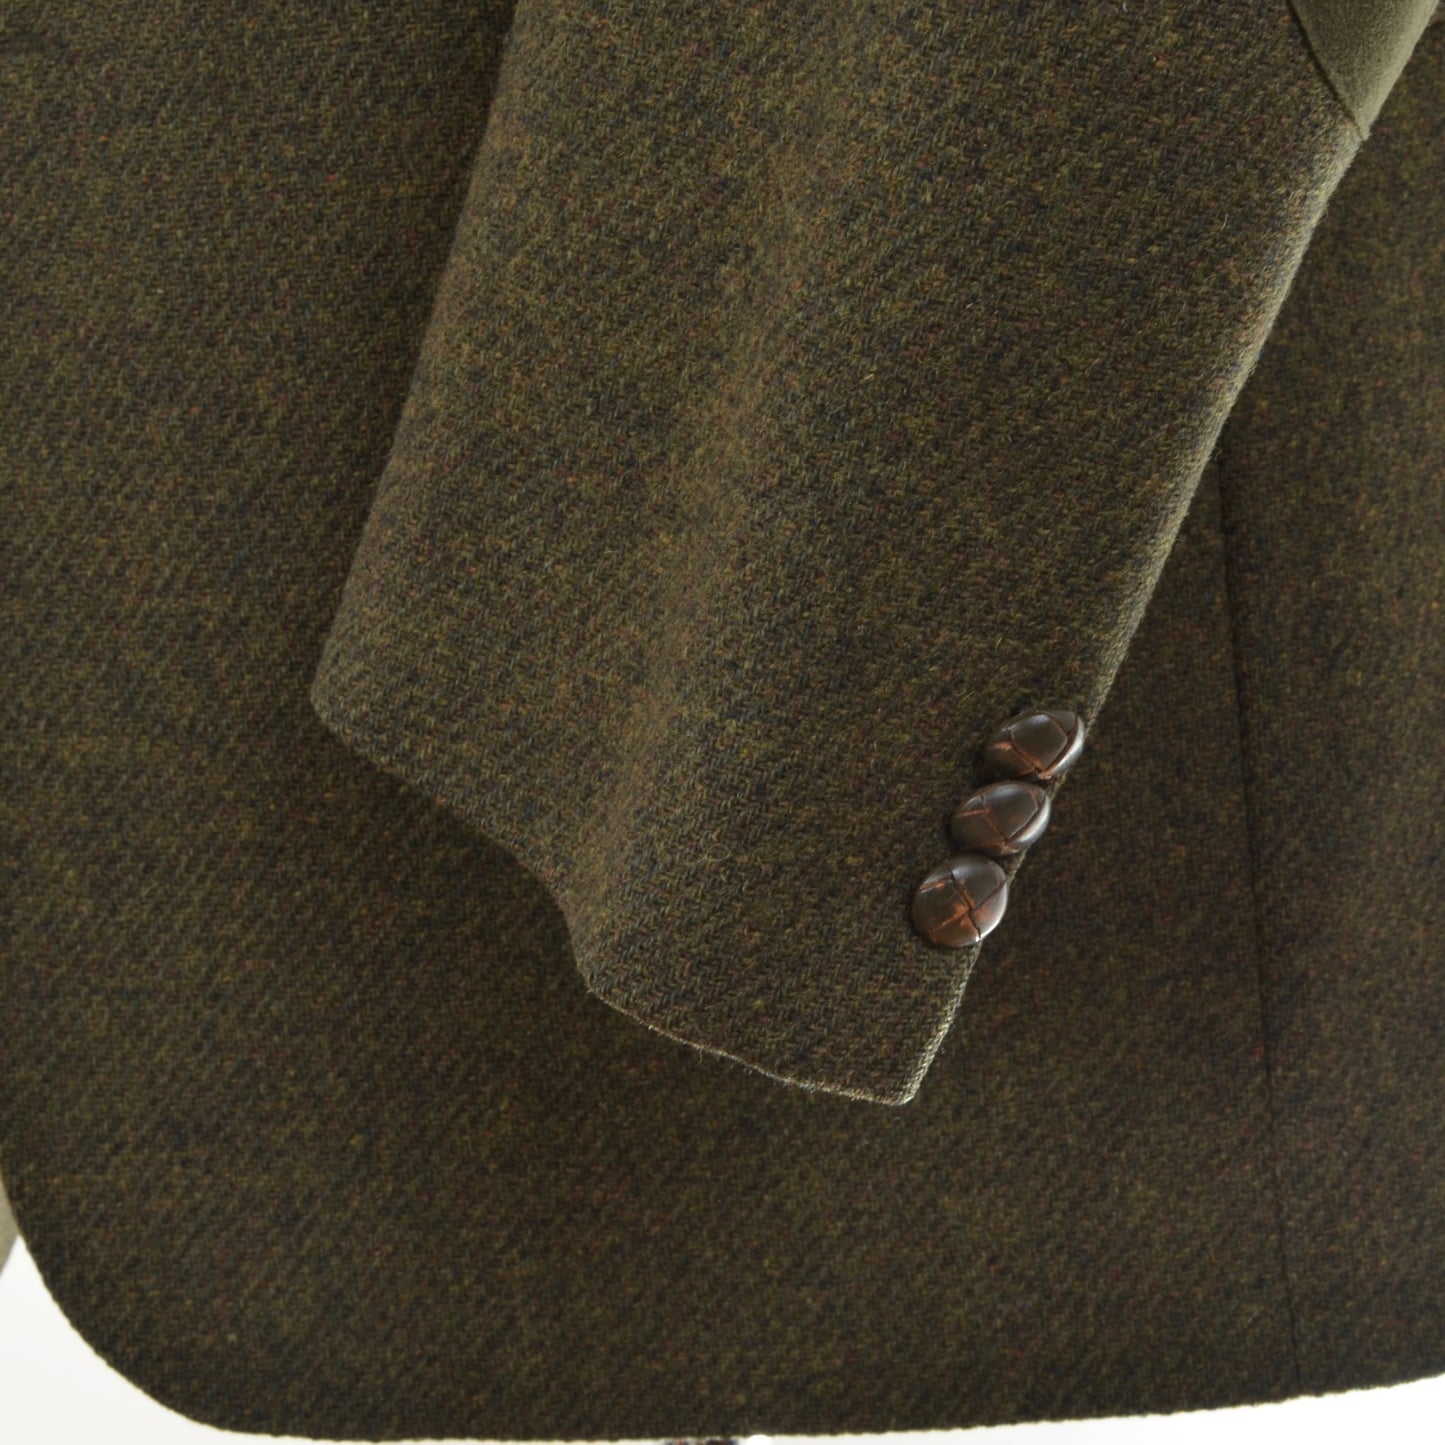 Sir Anthony Tweed Jacke Größe 52 - Grün